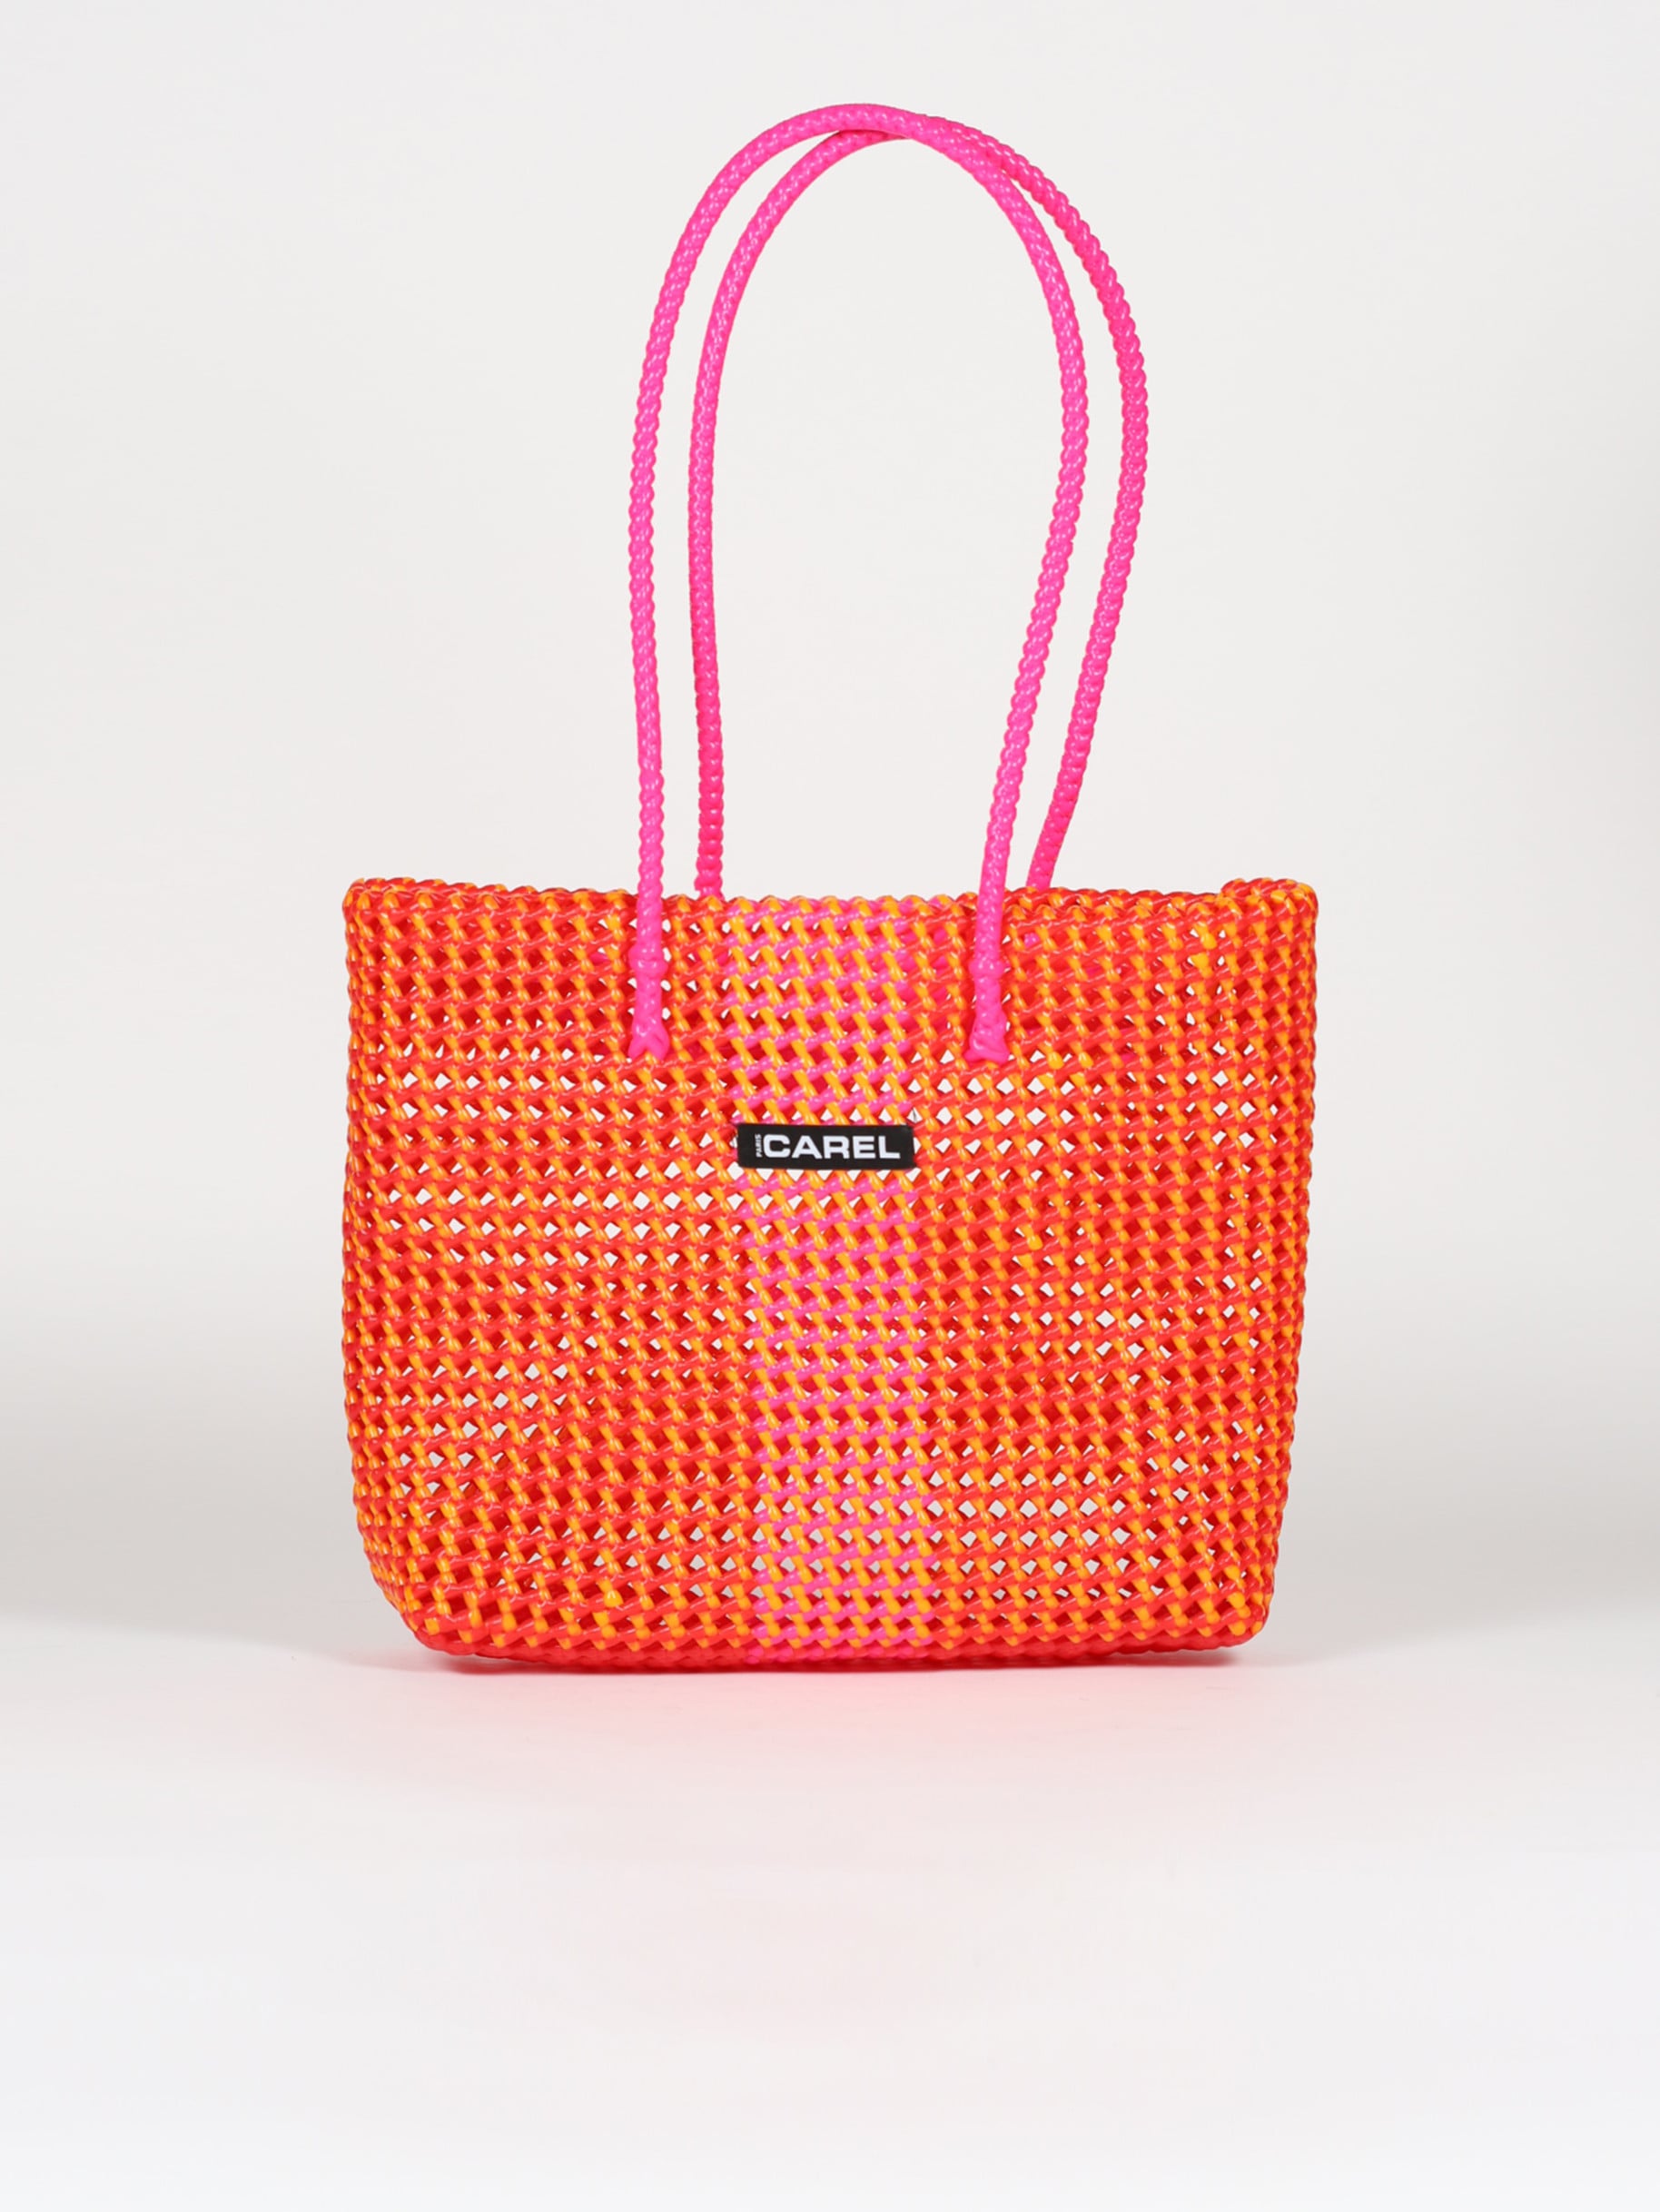 Ooh La La! Spot & Shop These Bags From Emily In Paris Season 2 — SSI Life